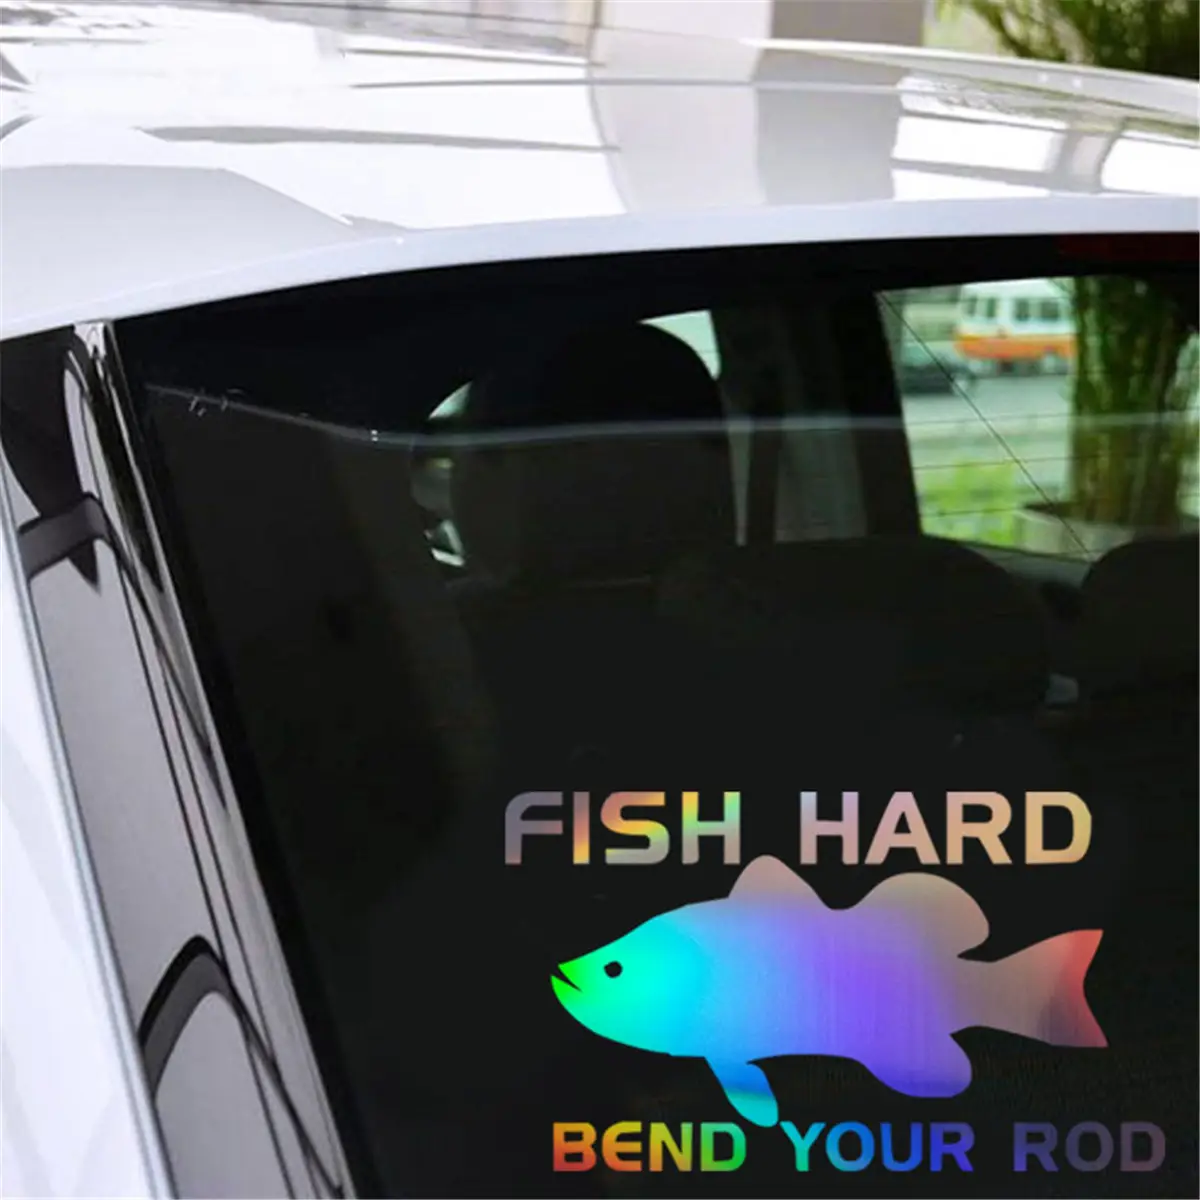 Fish Hard Bend Your Rod Funny Sticker Window Car Bumper Laptop Vinyl Decal Gift Die Cut Decals Laptop window Glass